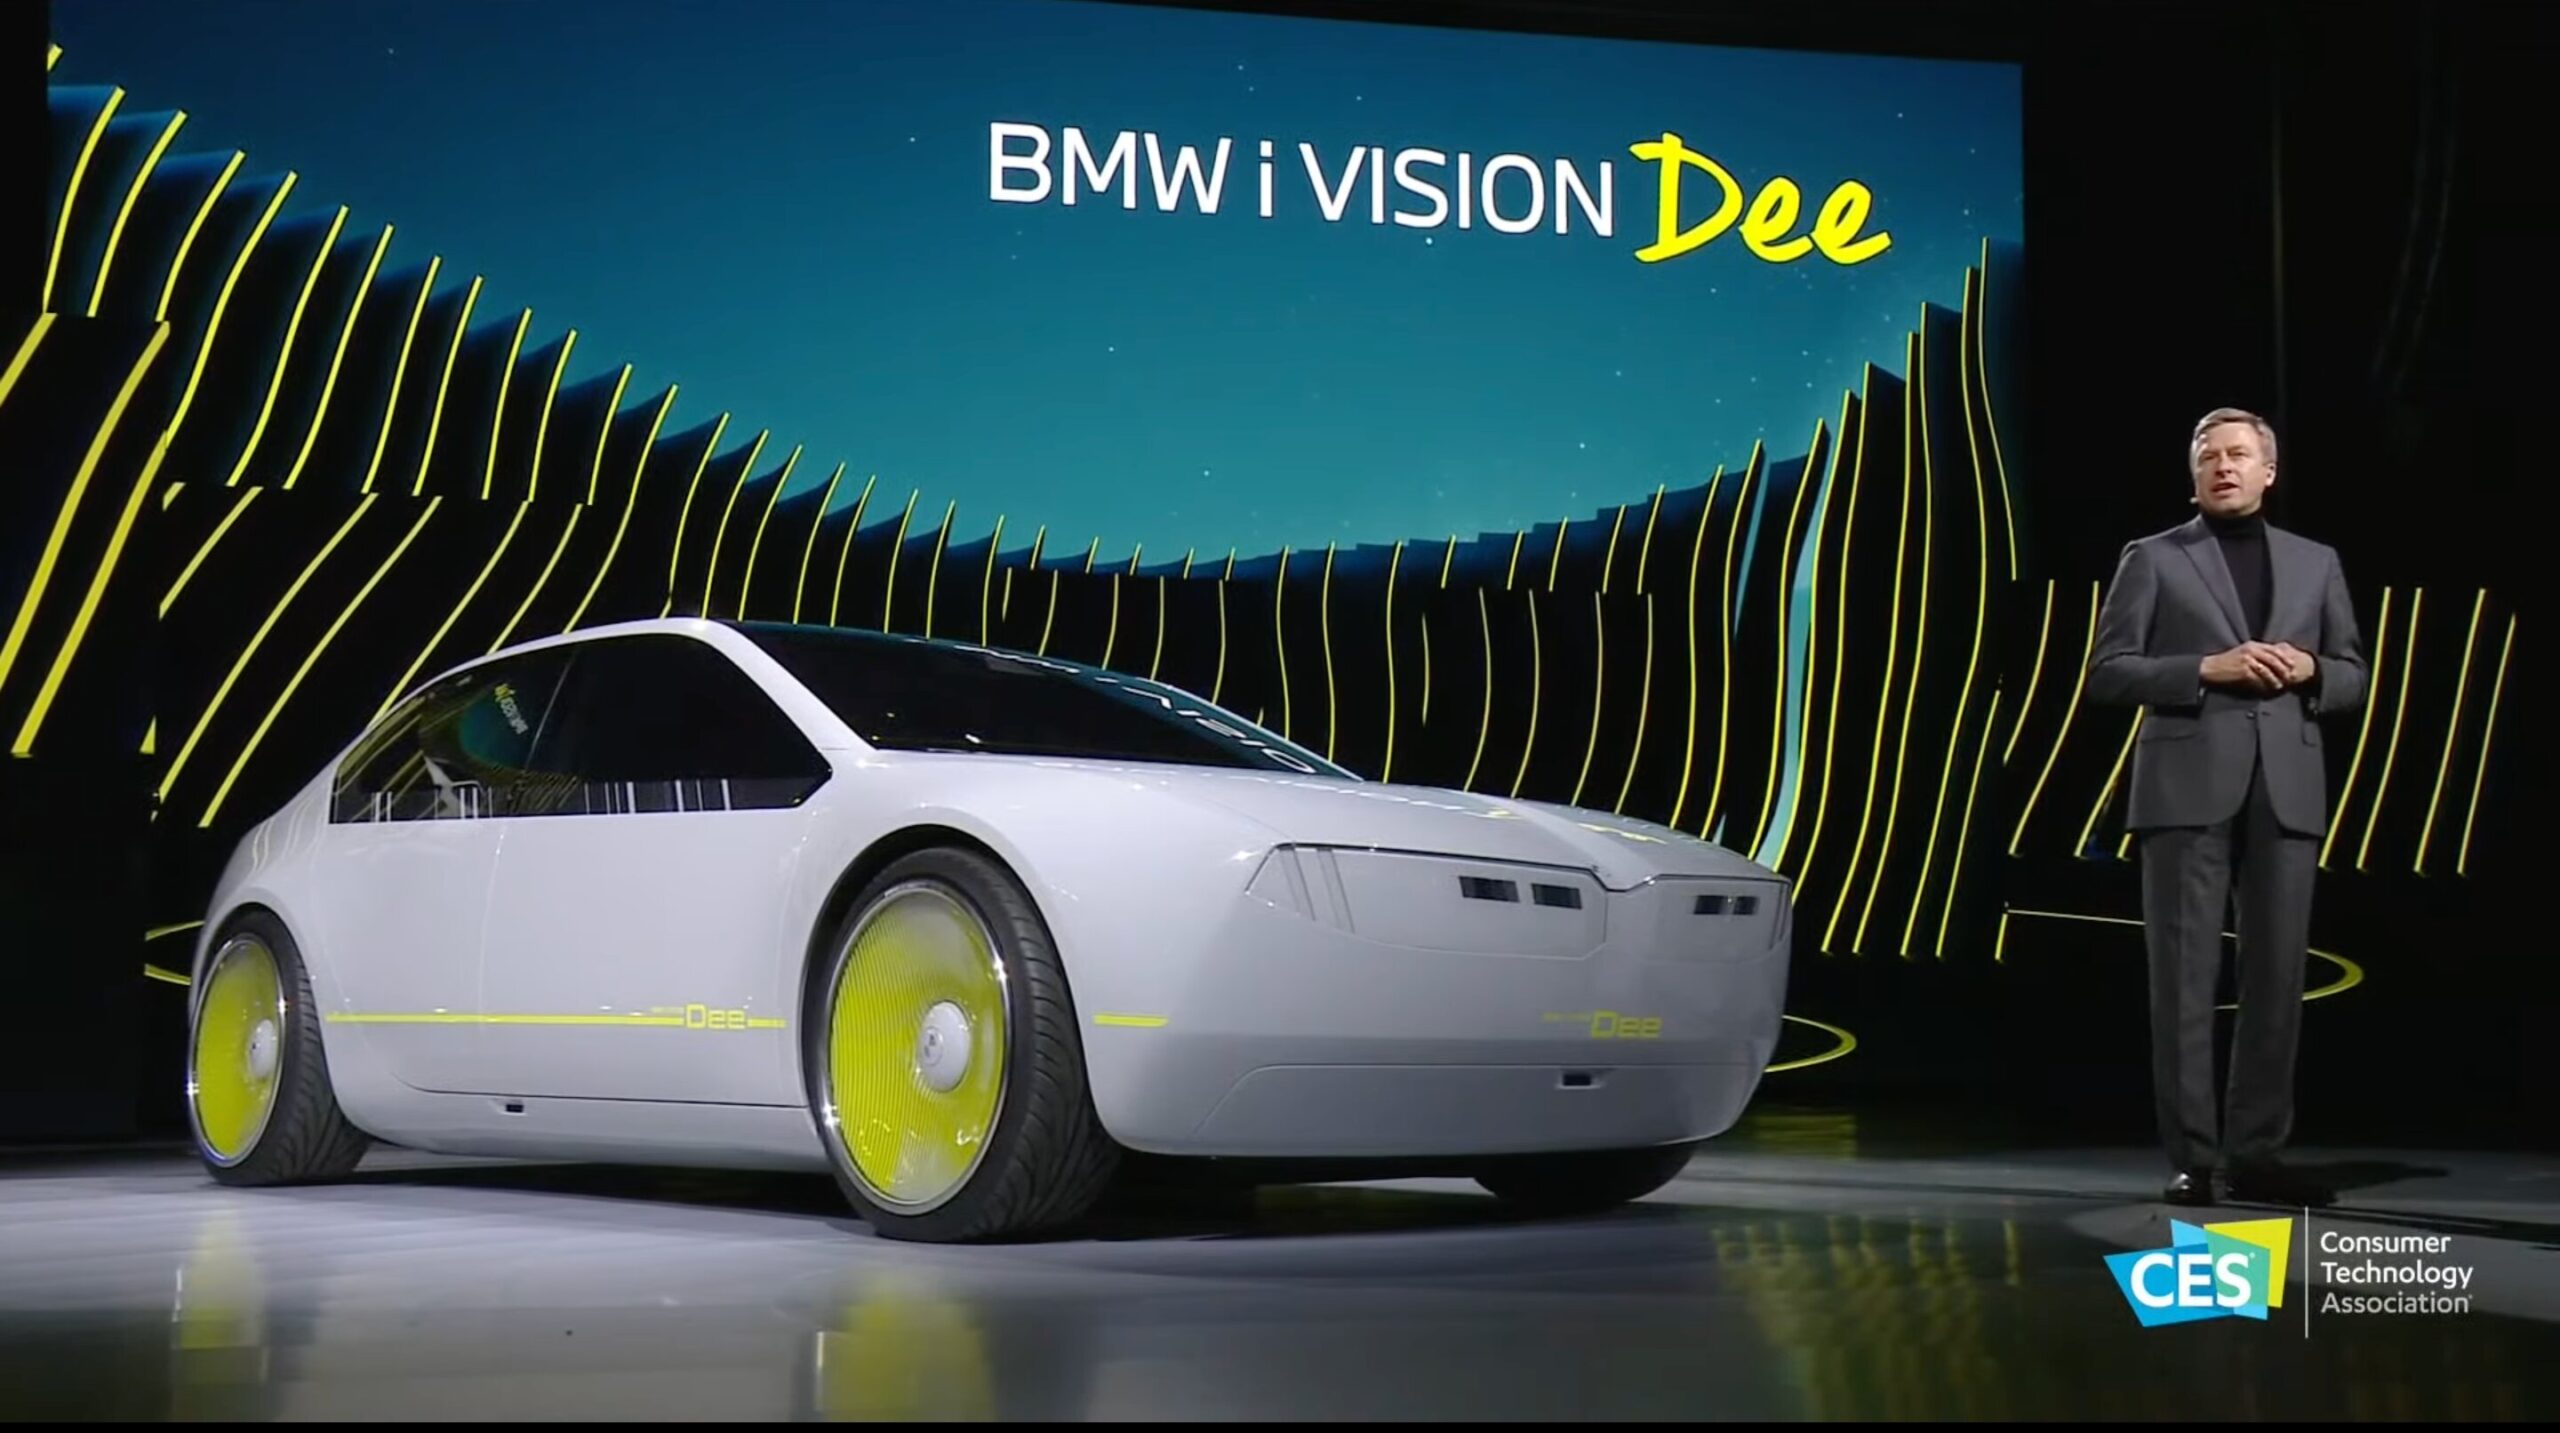 https://e-vehicleinfo.com/global/bmw-unveils-its-new-electric-digital-car-concept-i-vision-dee/